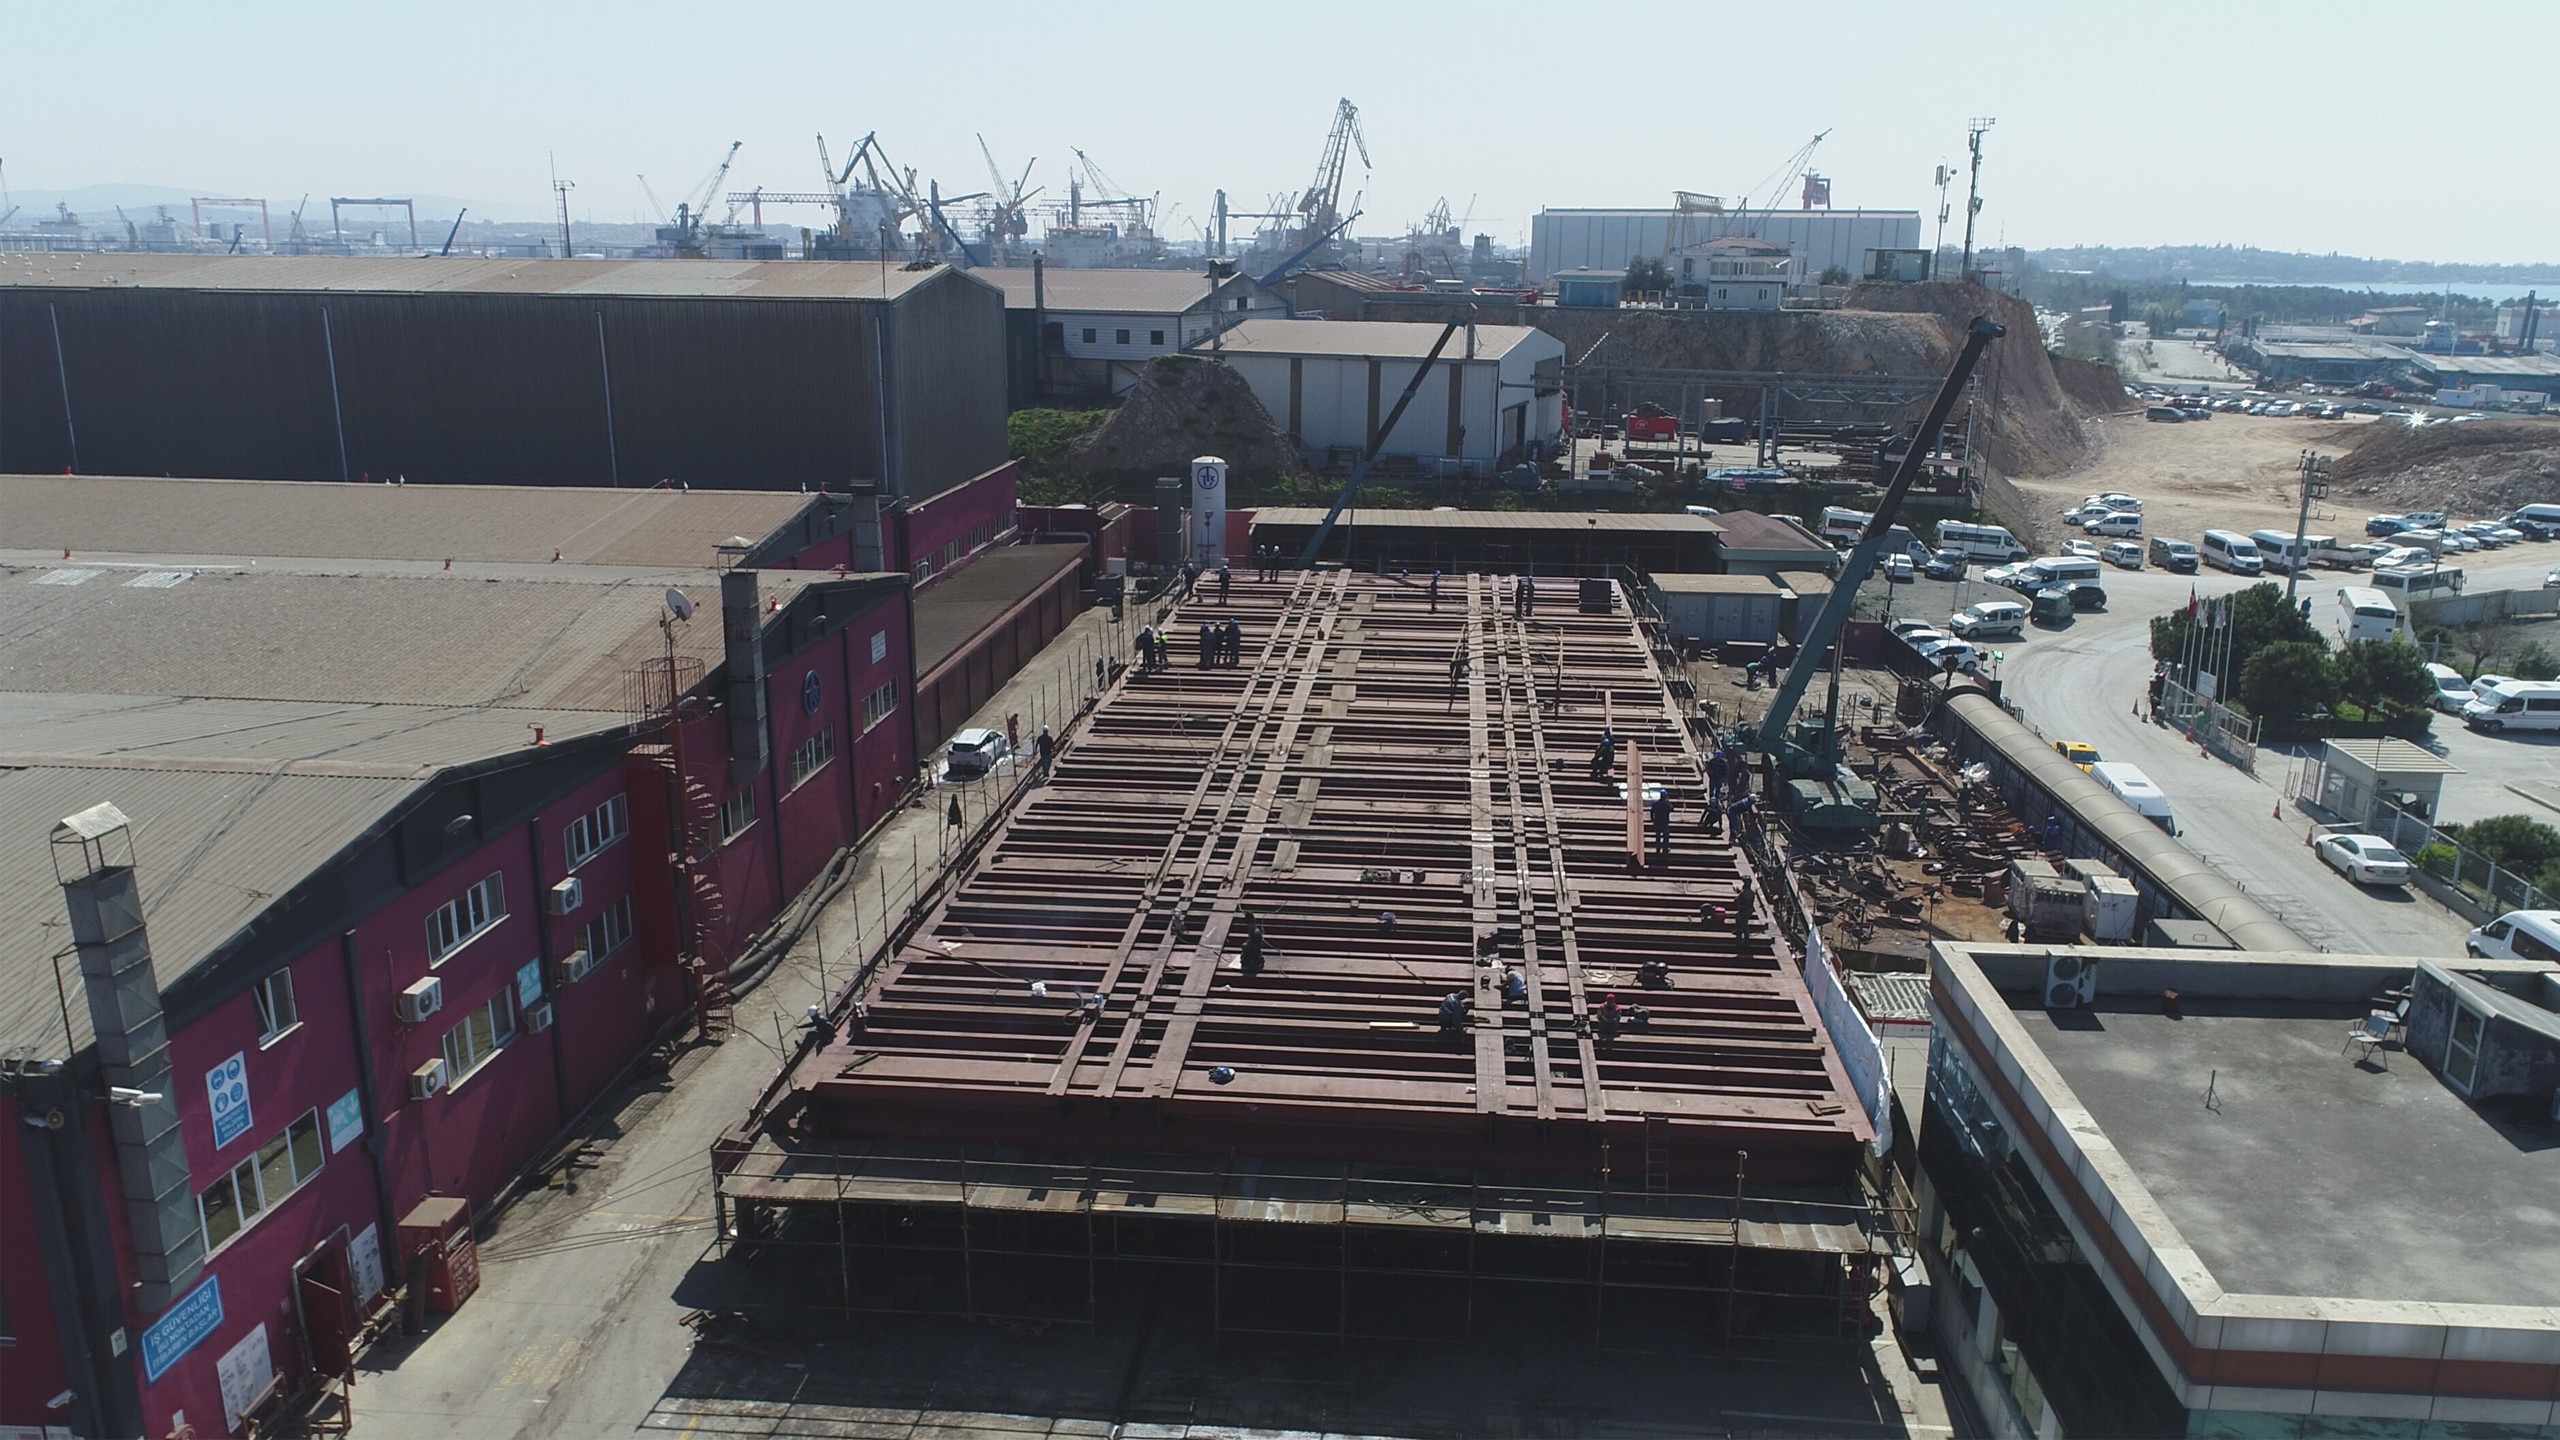 International Turkmenbashi Harbor Project- Shiplift Platform Manufacturing & Assembly